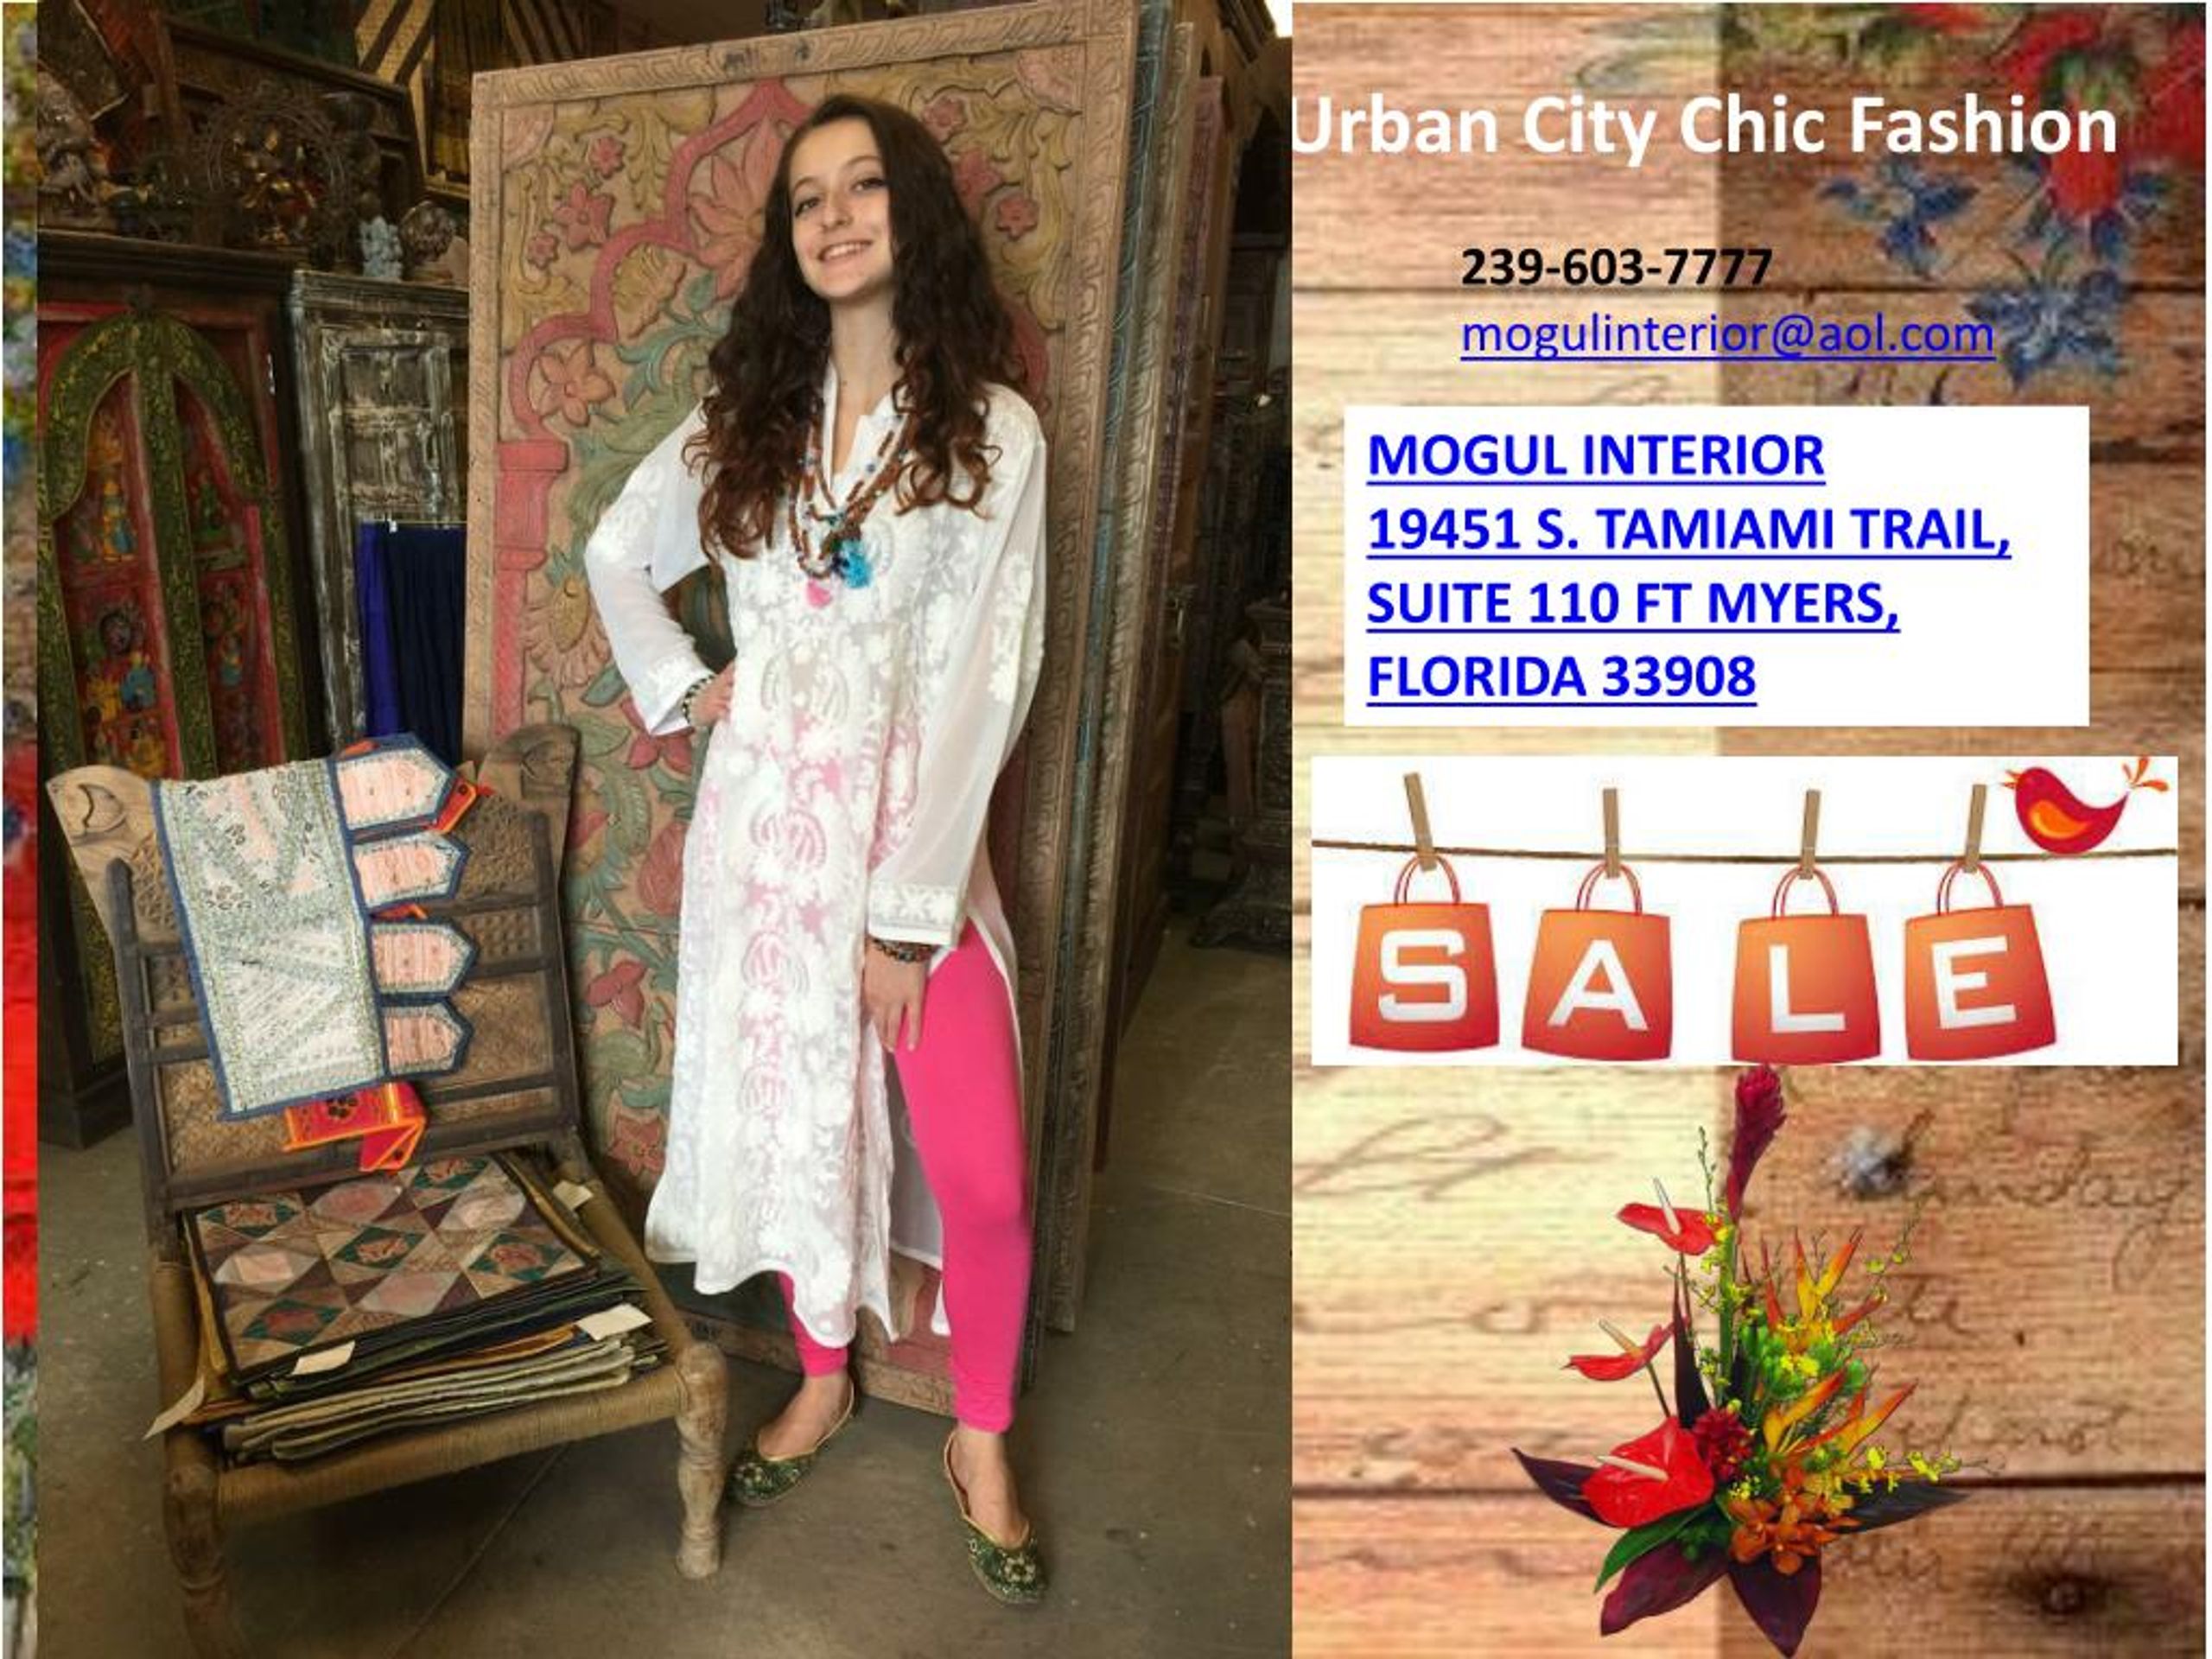 Ppt Urban City Chic Fashion Powerpoint Presentation Free